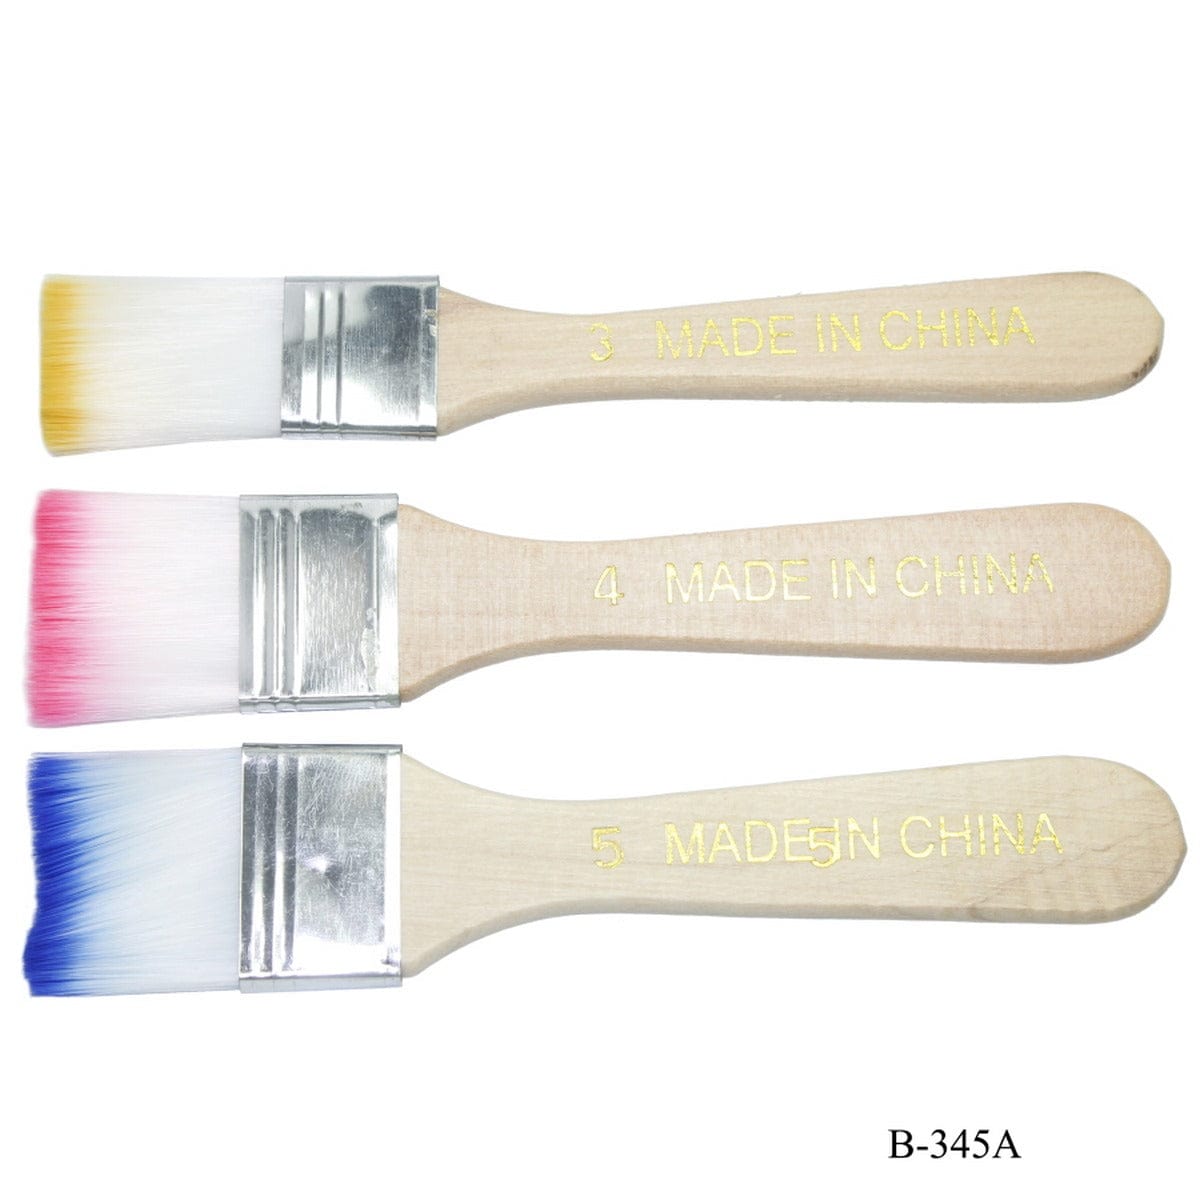 jags-mumbai Brush Painting Brush 3pcs Set B-345A